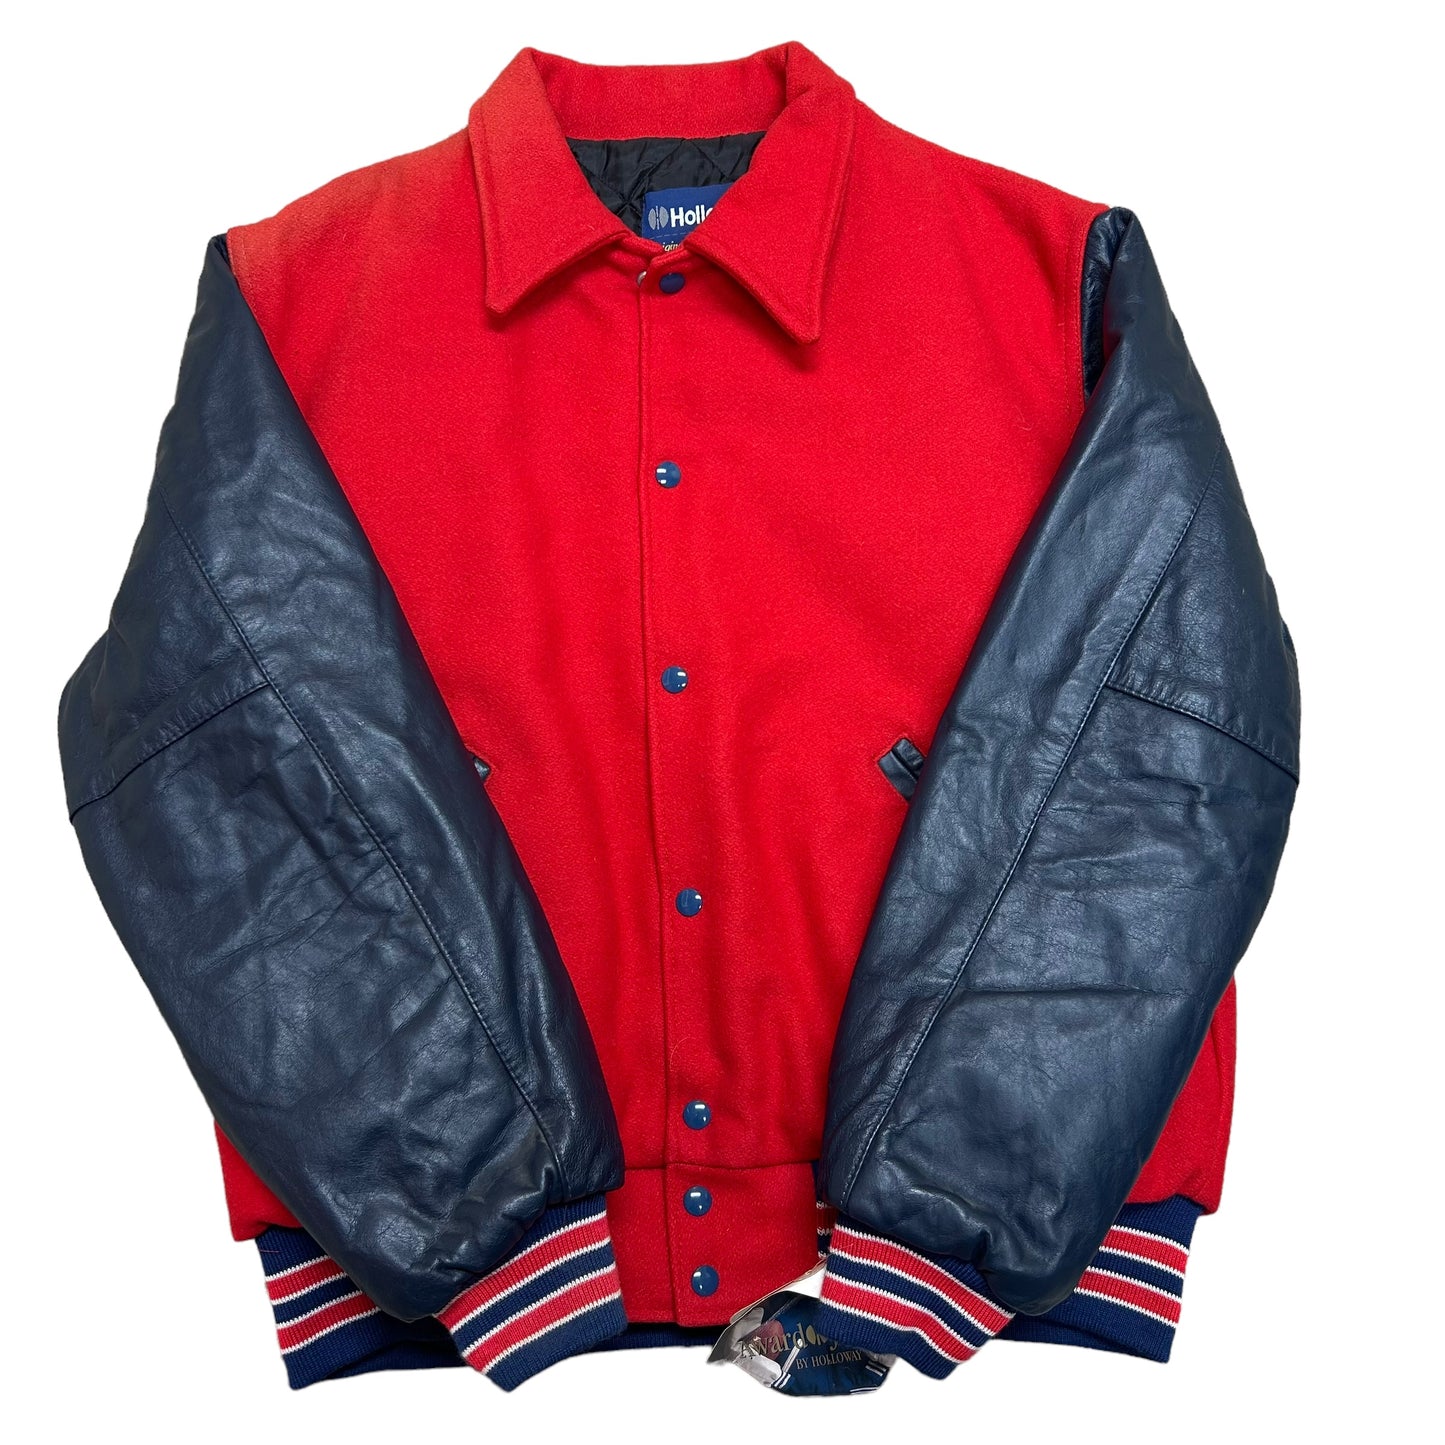 NWT Vintage 1990s Holloway Navy Blue/Red Leather & Wool Varsity Jacket - Size XL (Fits L/XL)